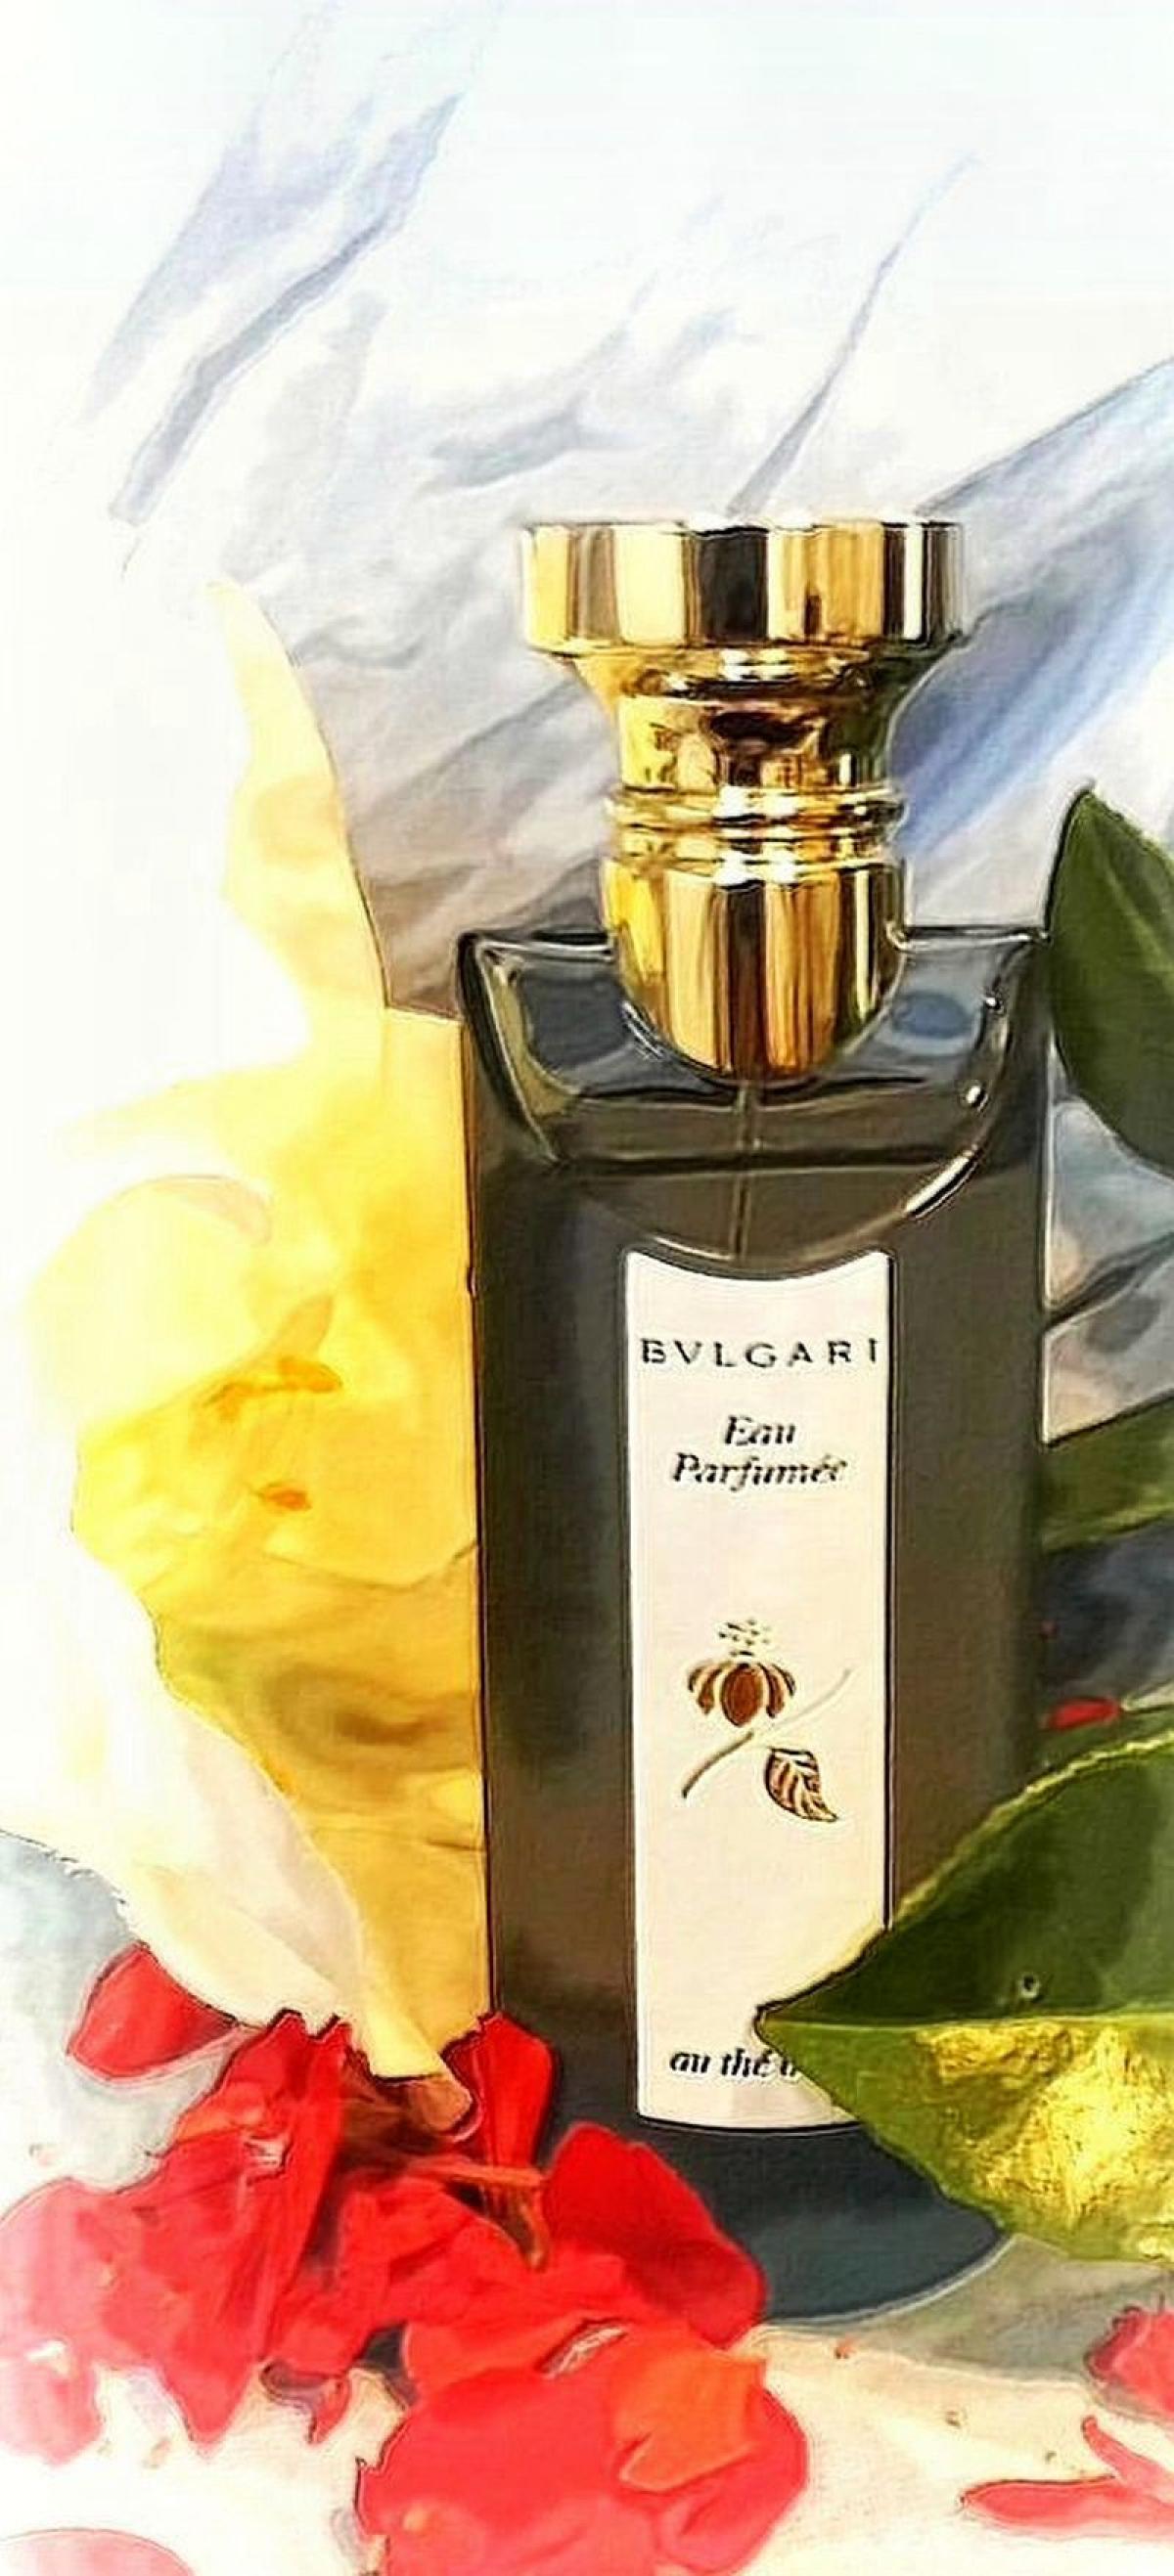 Eau Parfumee au The Bleu Bvlgari perfume - a fragrance for women and